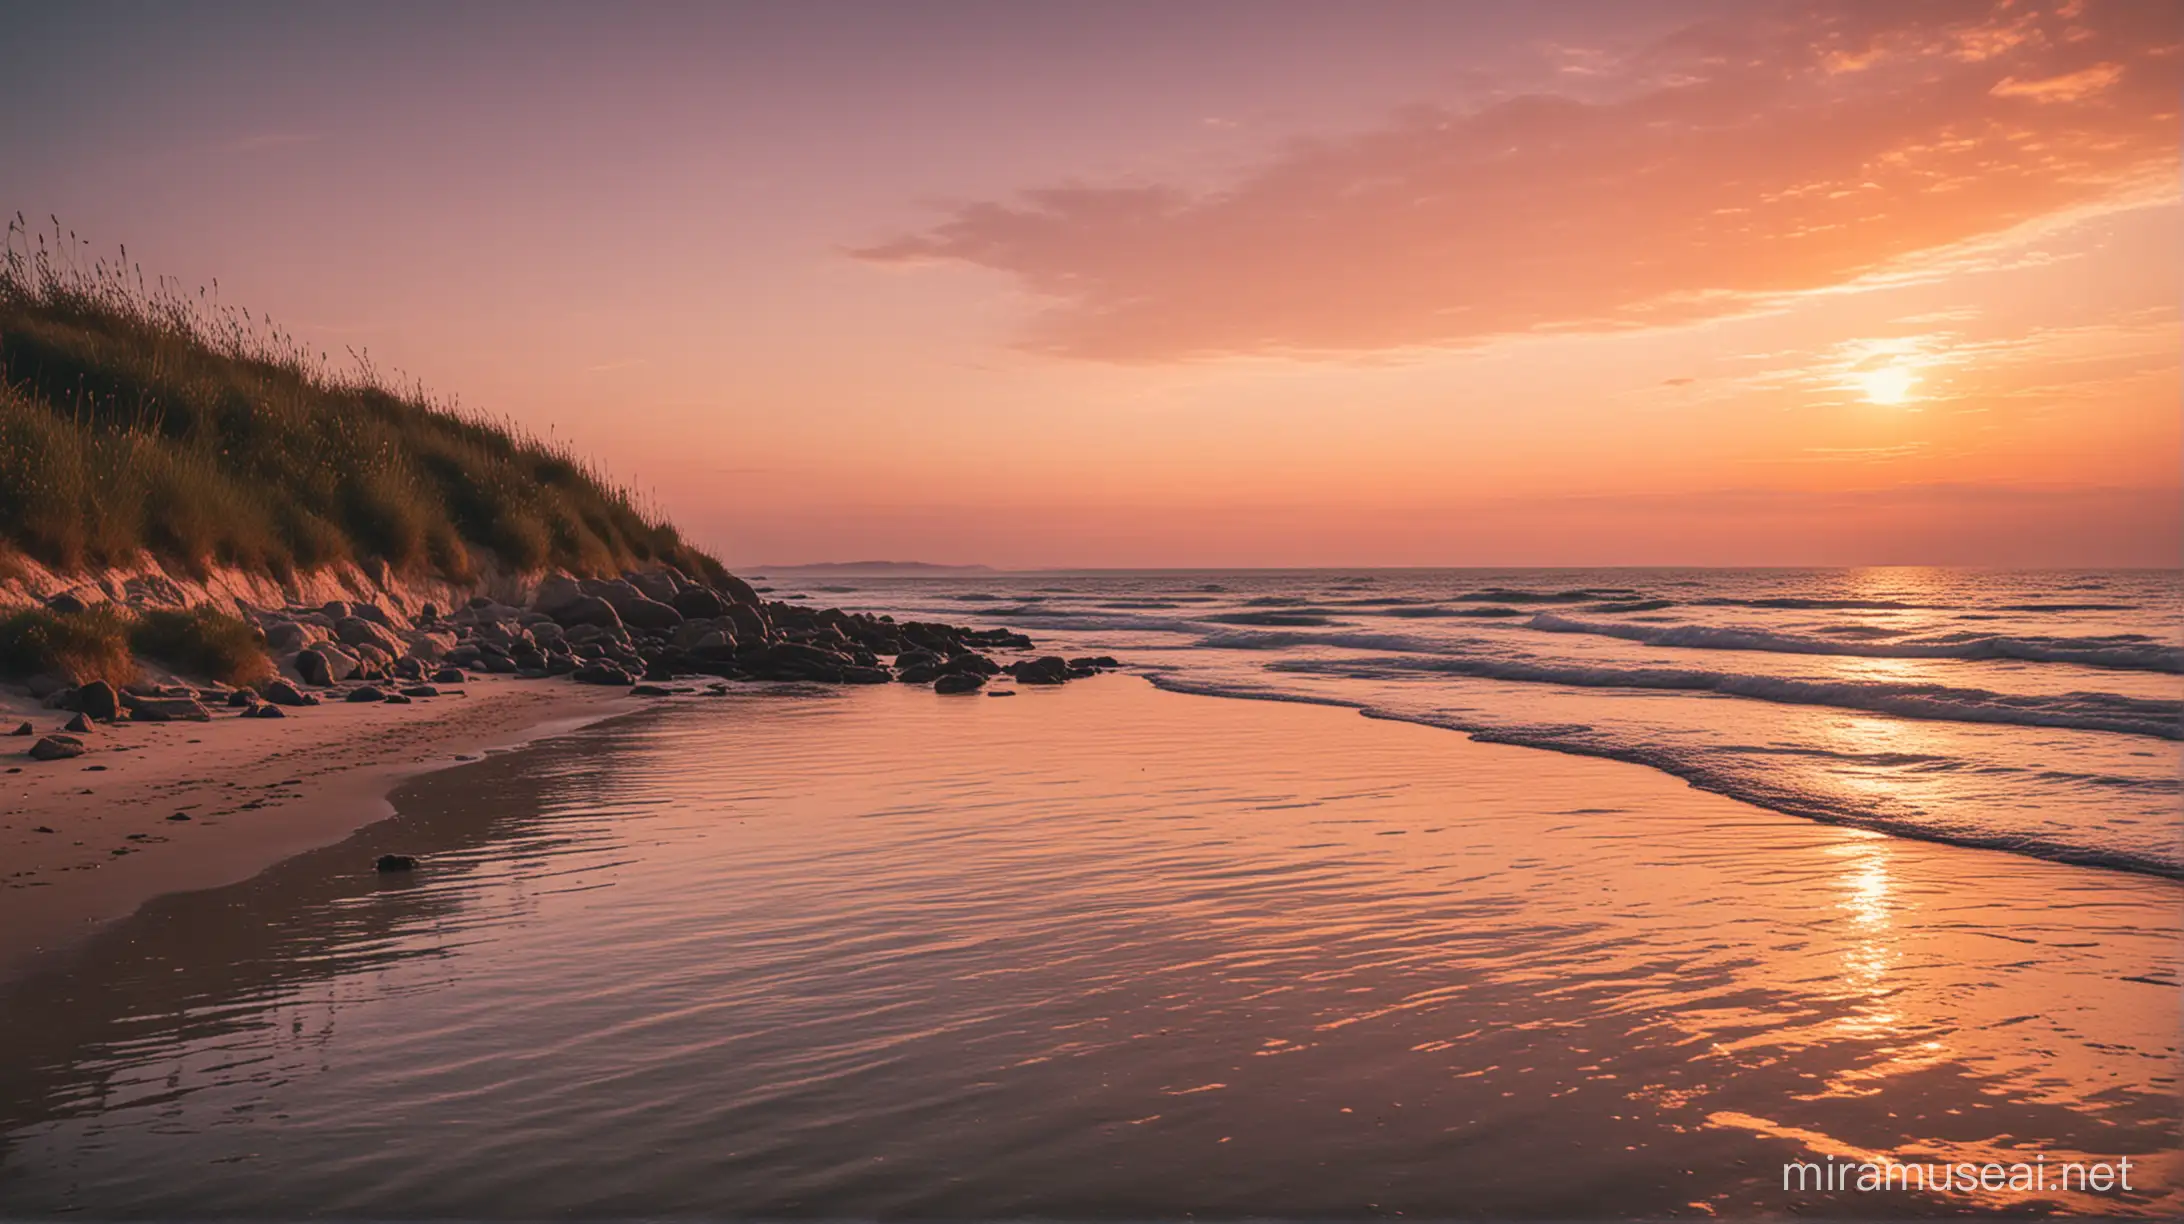 a wonderful photograph from a sunet near a beach in early summer, serne feelings, nostalgic vibes, wonderful colors